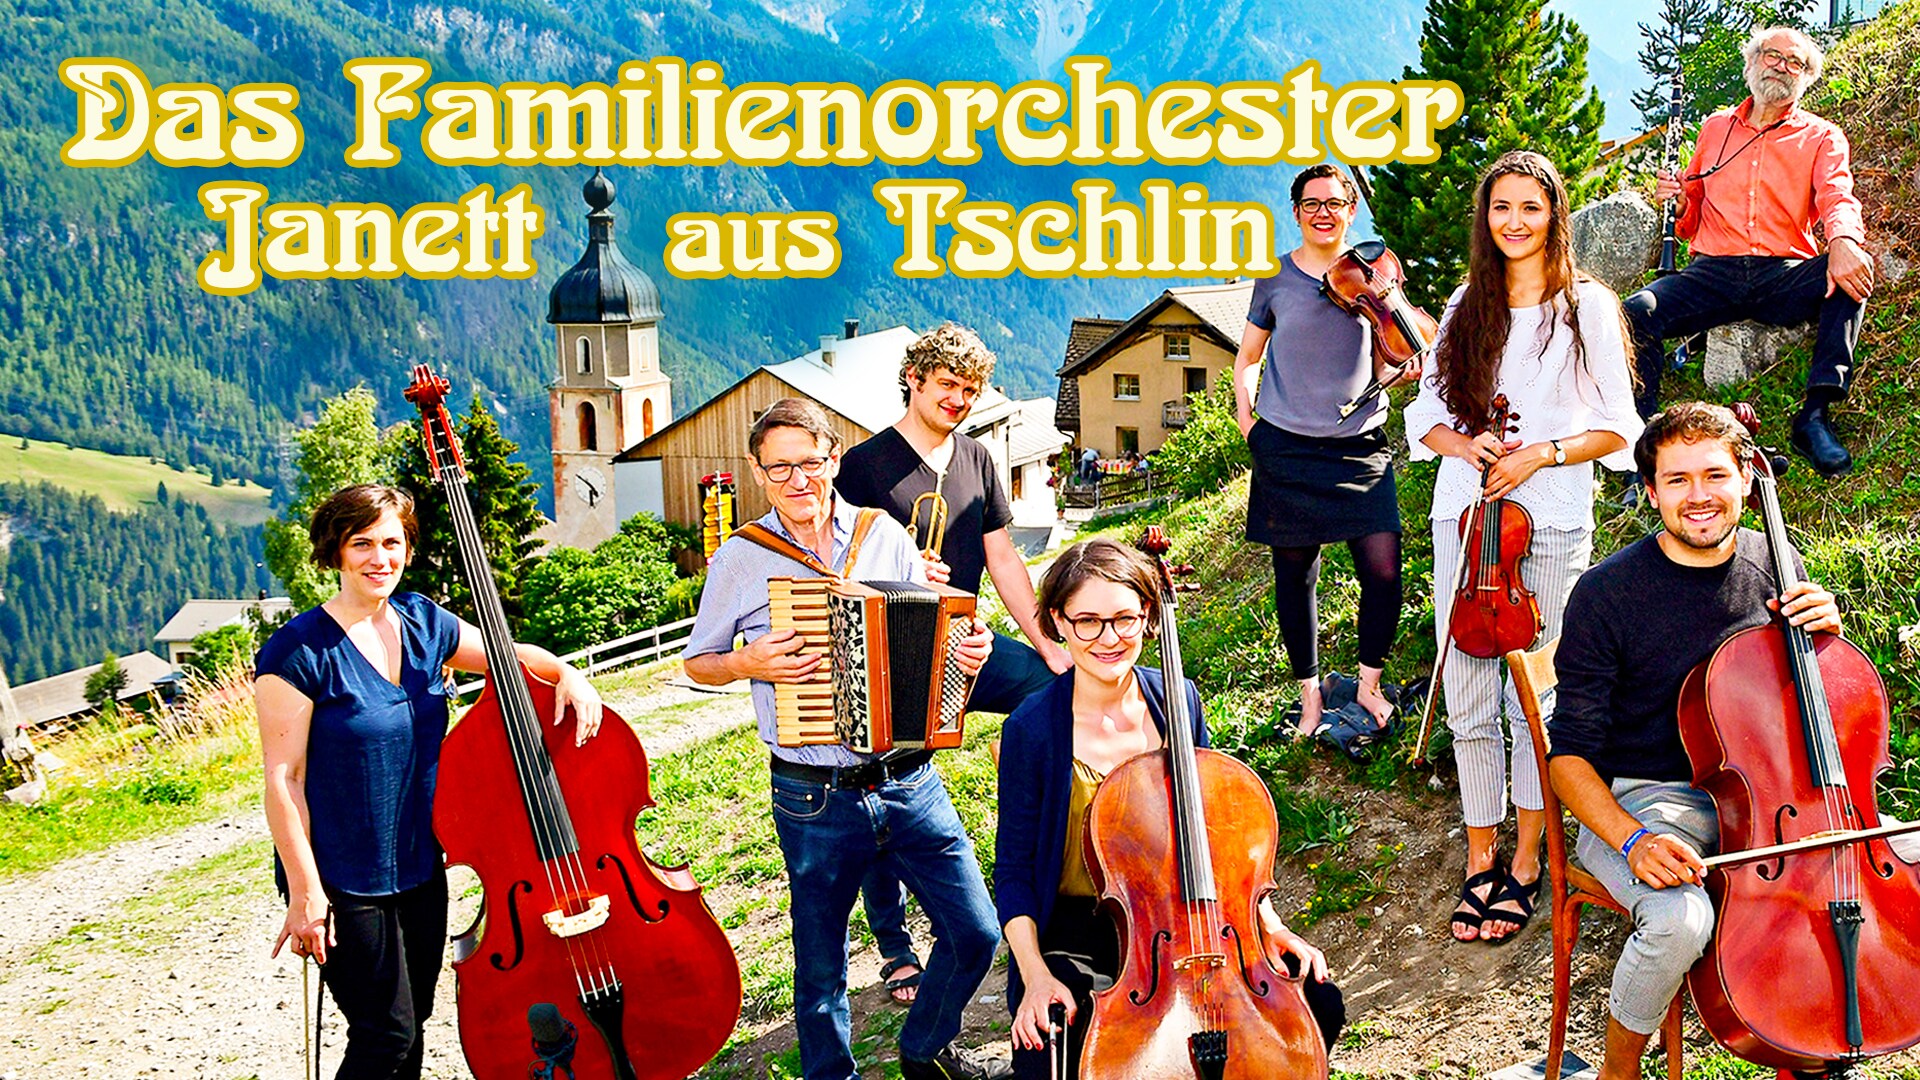 Das Familienorchester Janett aus Tschlin